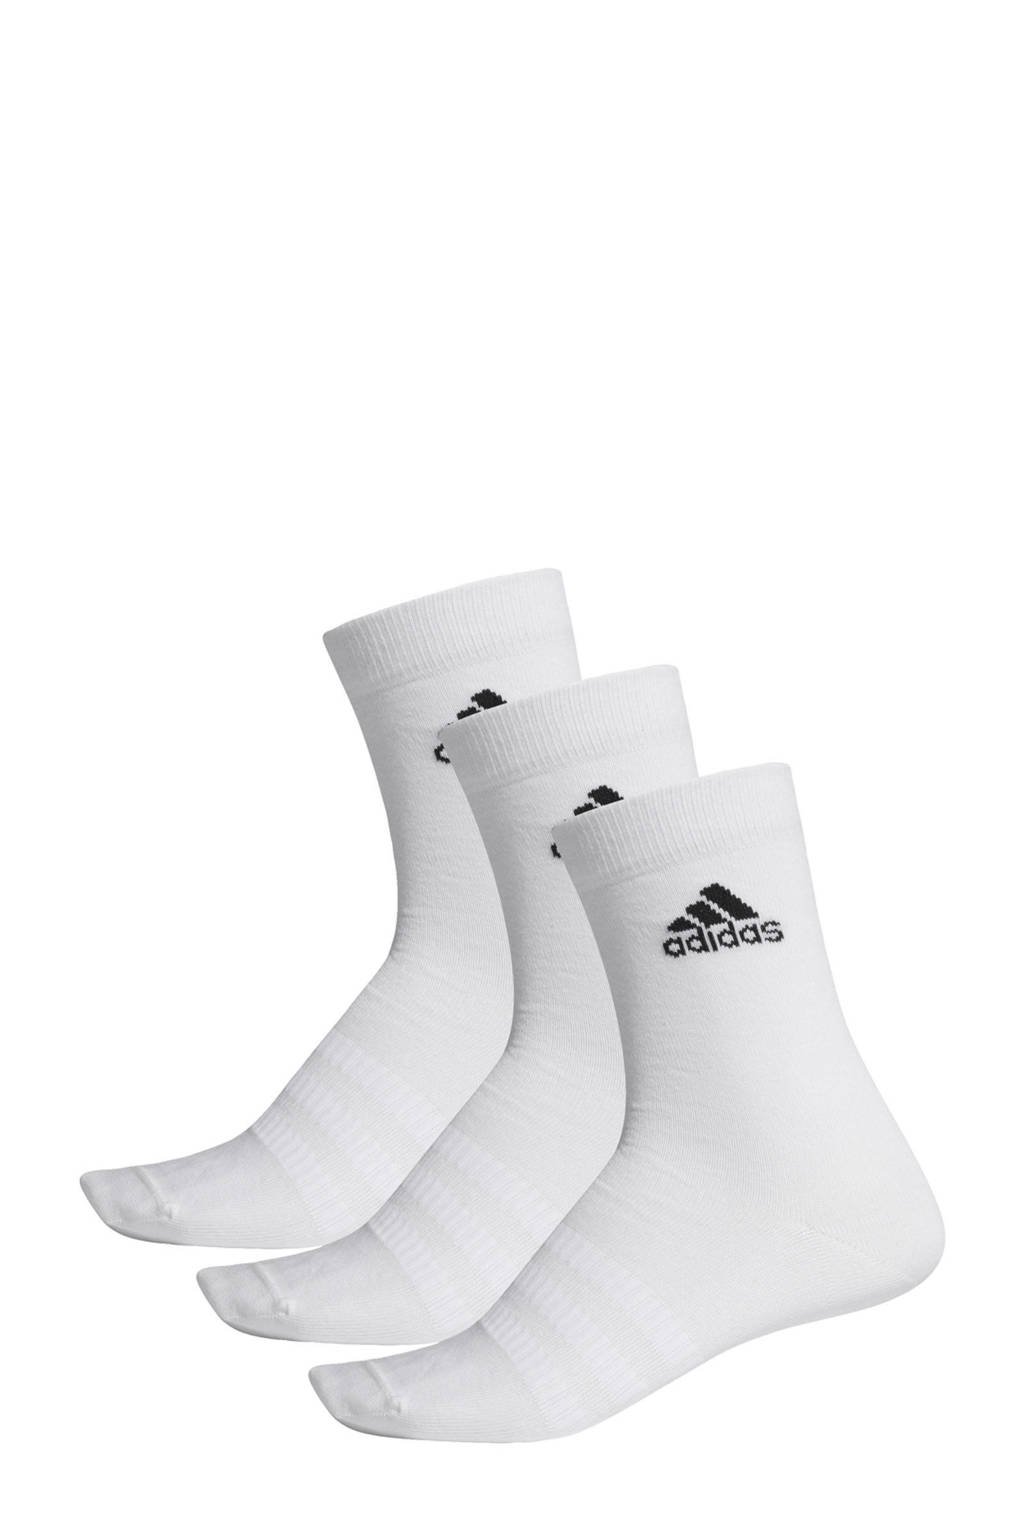 adidas Performance sportsokken - set van 3 wit